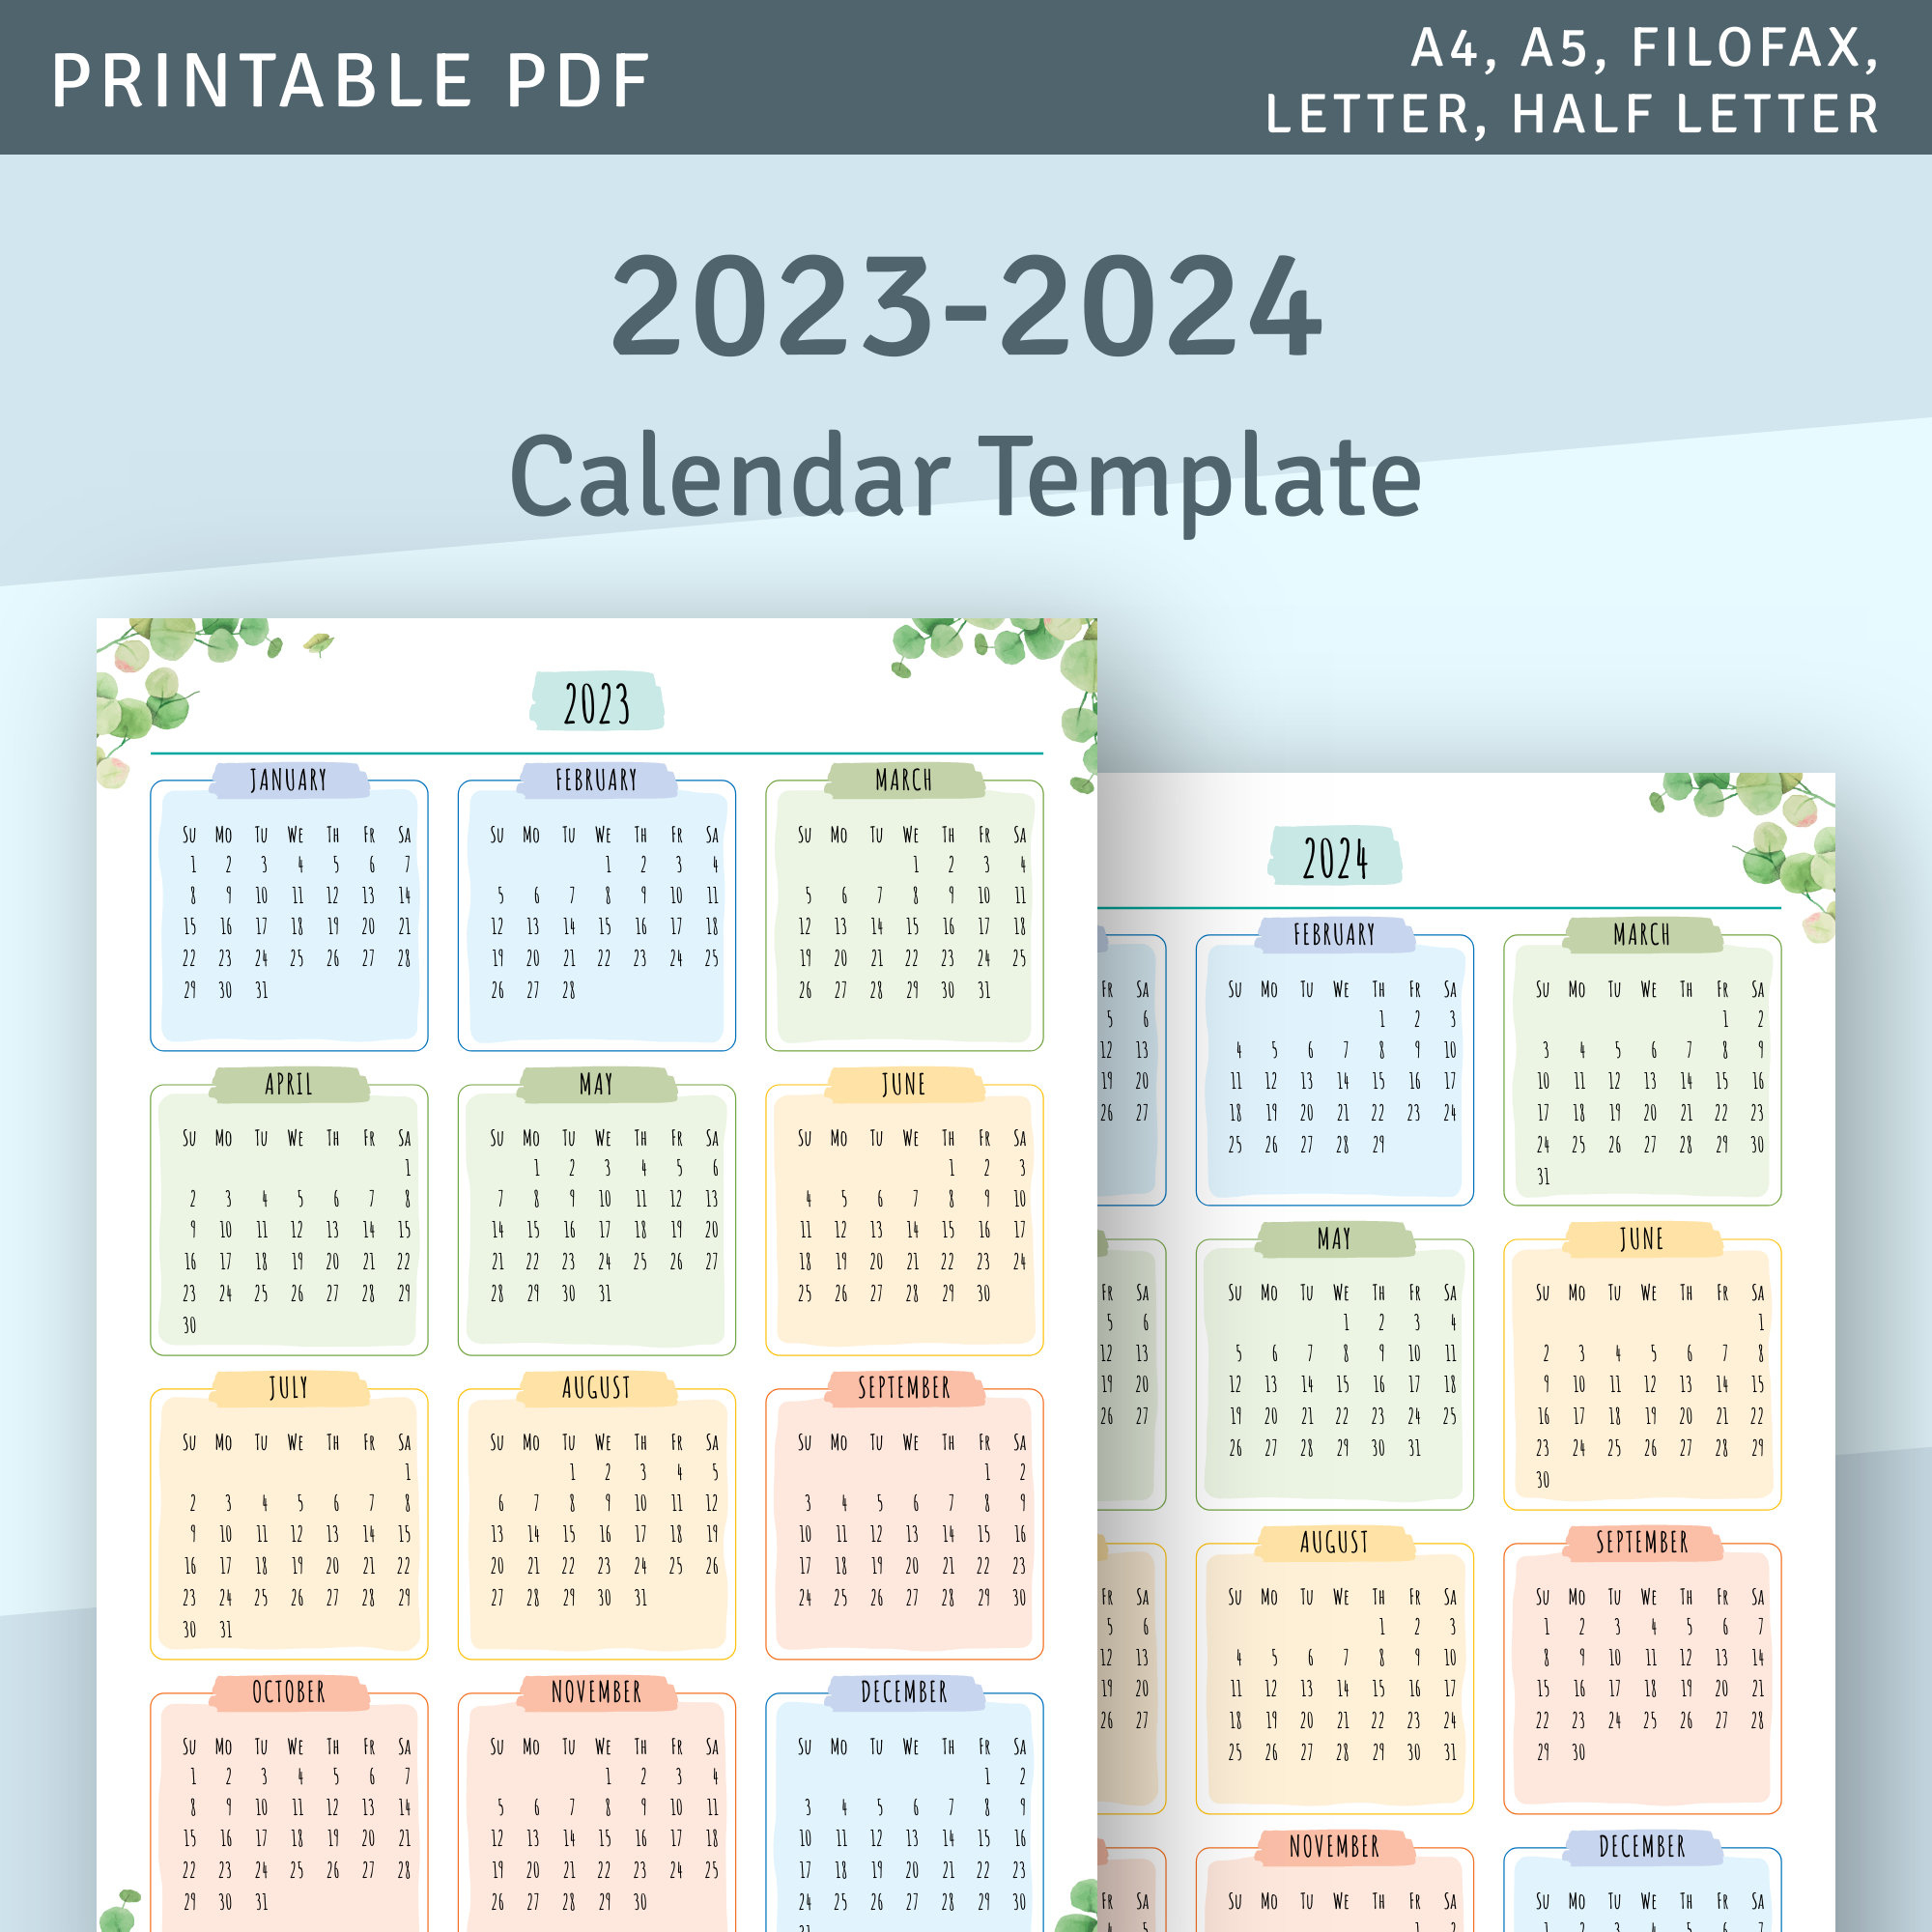 Printable Calendar 2023 2024 Year At A Glance Calendar - Etsy | 2023 Calendar 2024 Printable Nz